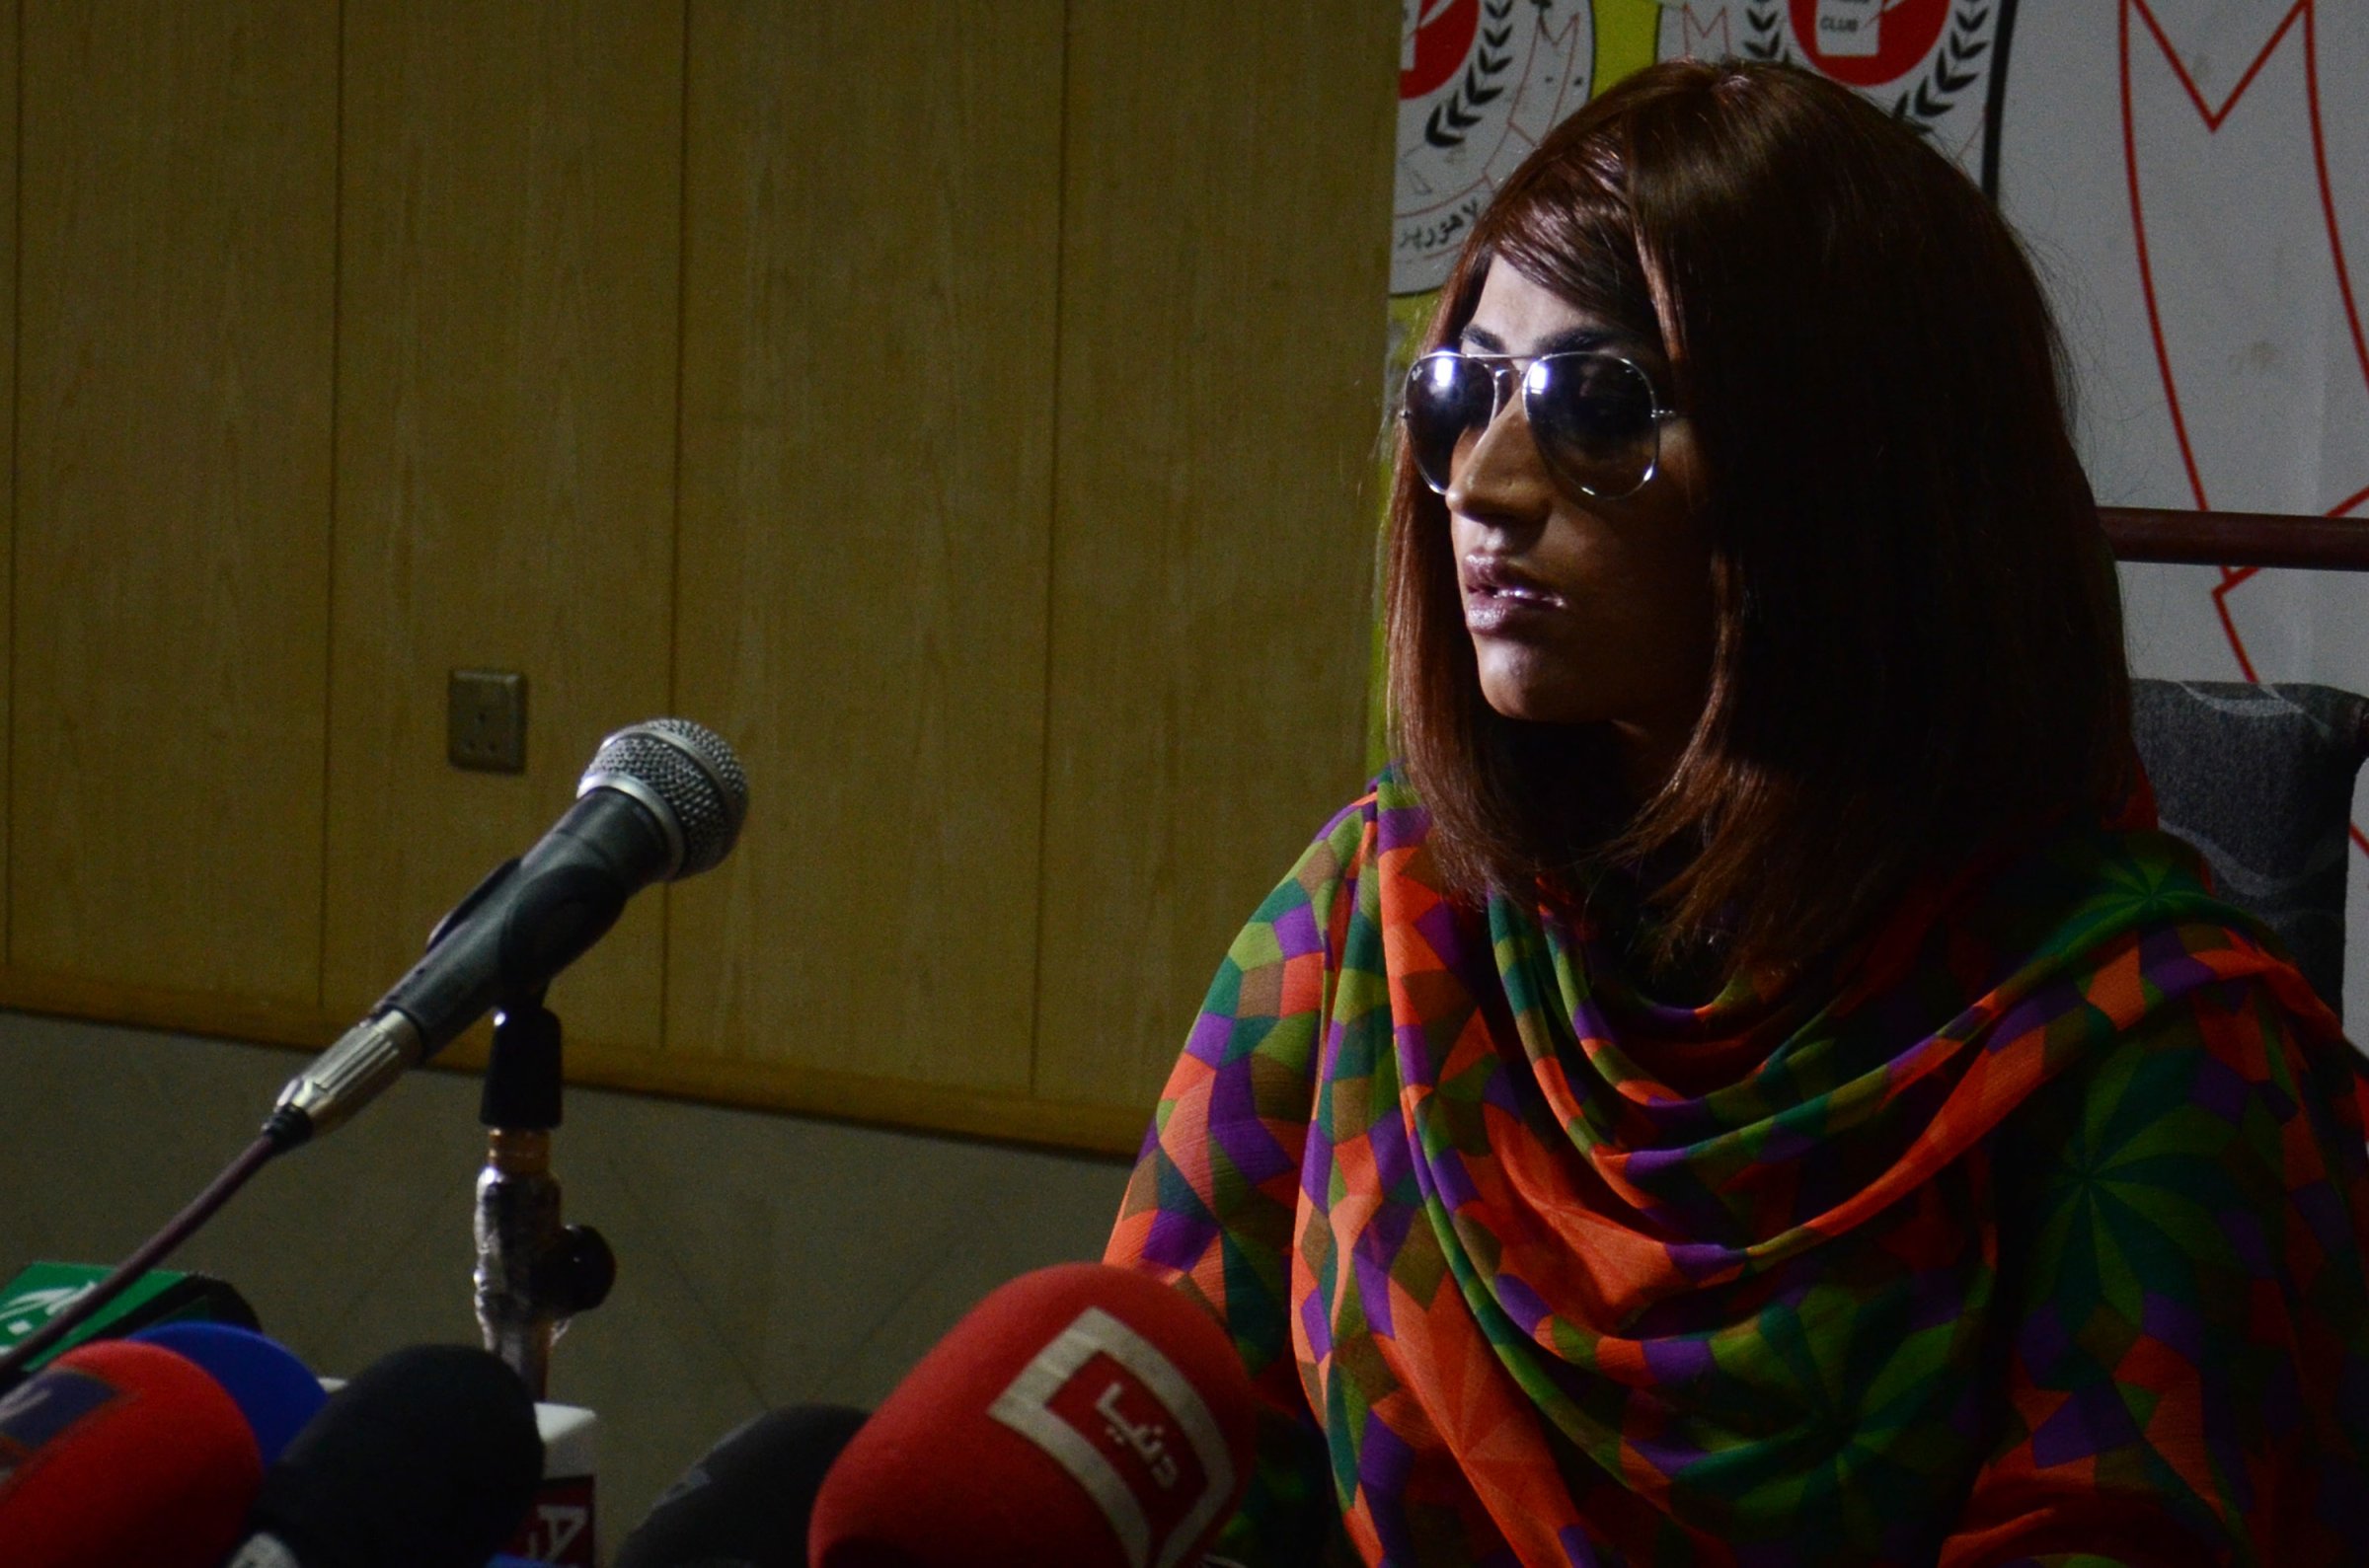 Late Pakistani actress and model Qandeel Baloch addresses the media